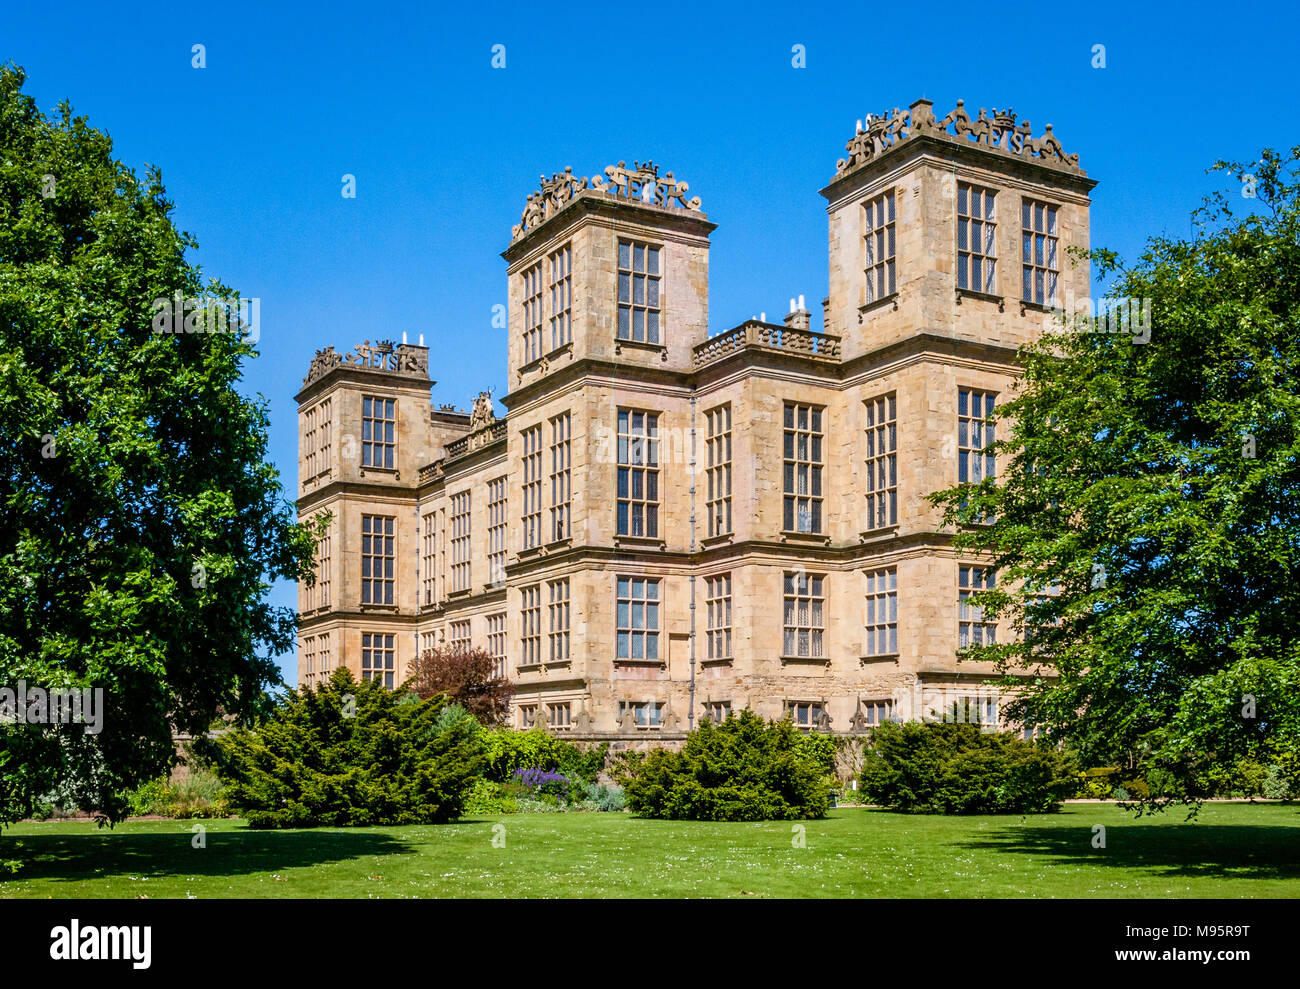 Hardwick Hall built by Robert Smythson for Bess of Hardwick - Derbyshire UK Stock Photo